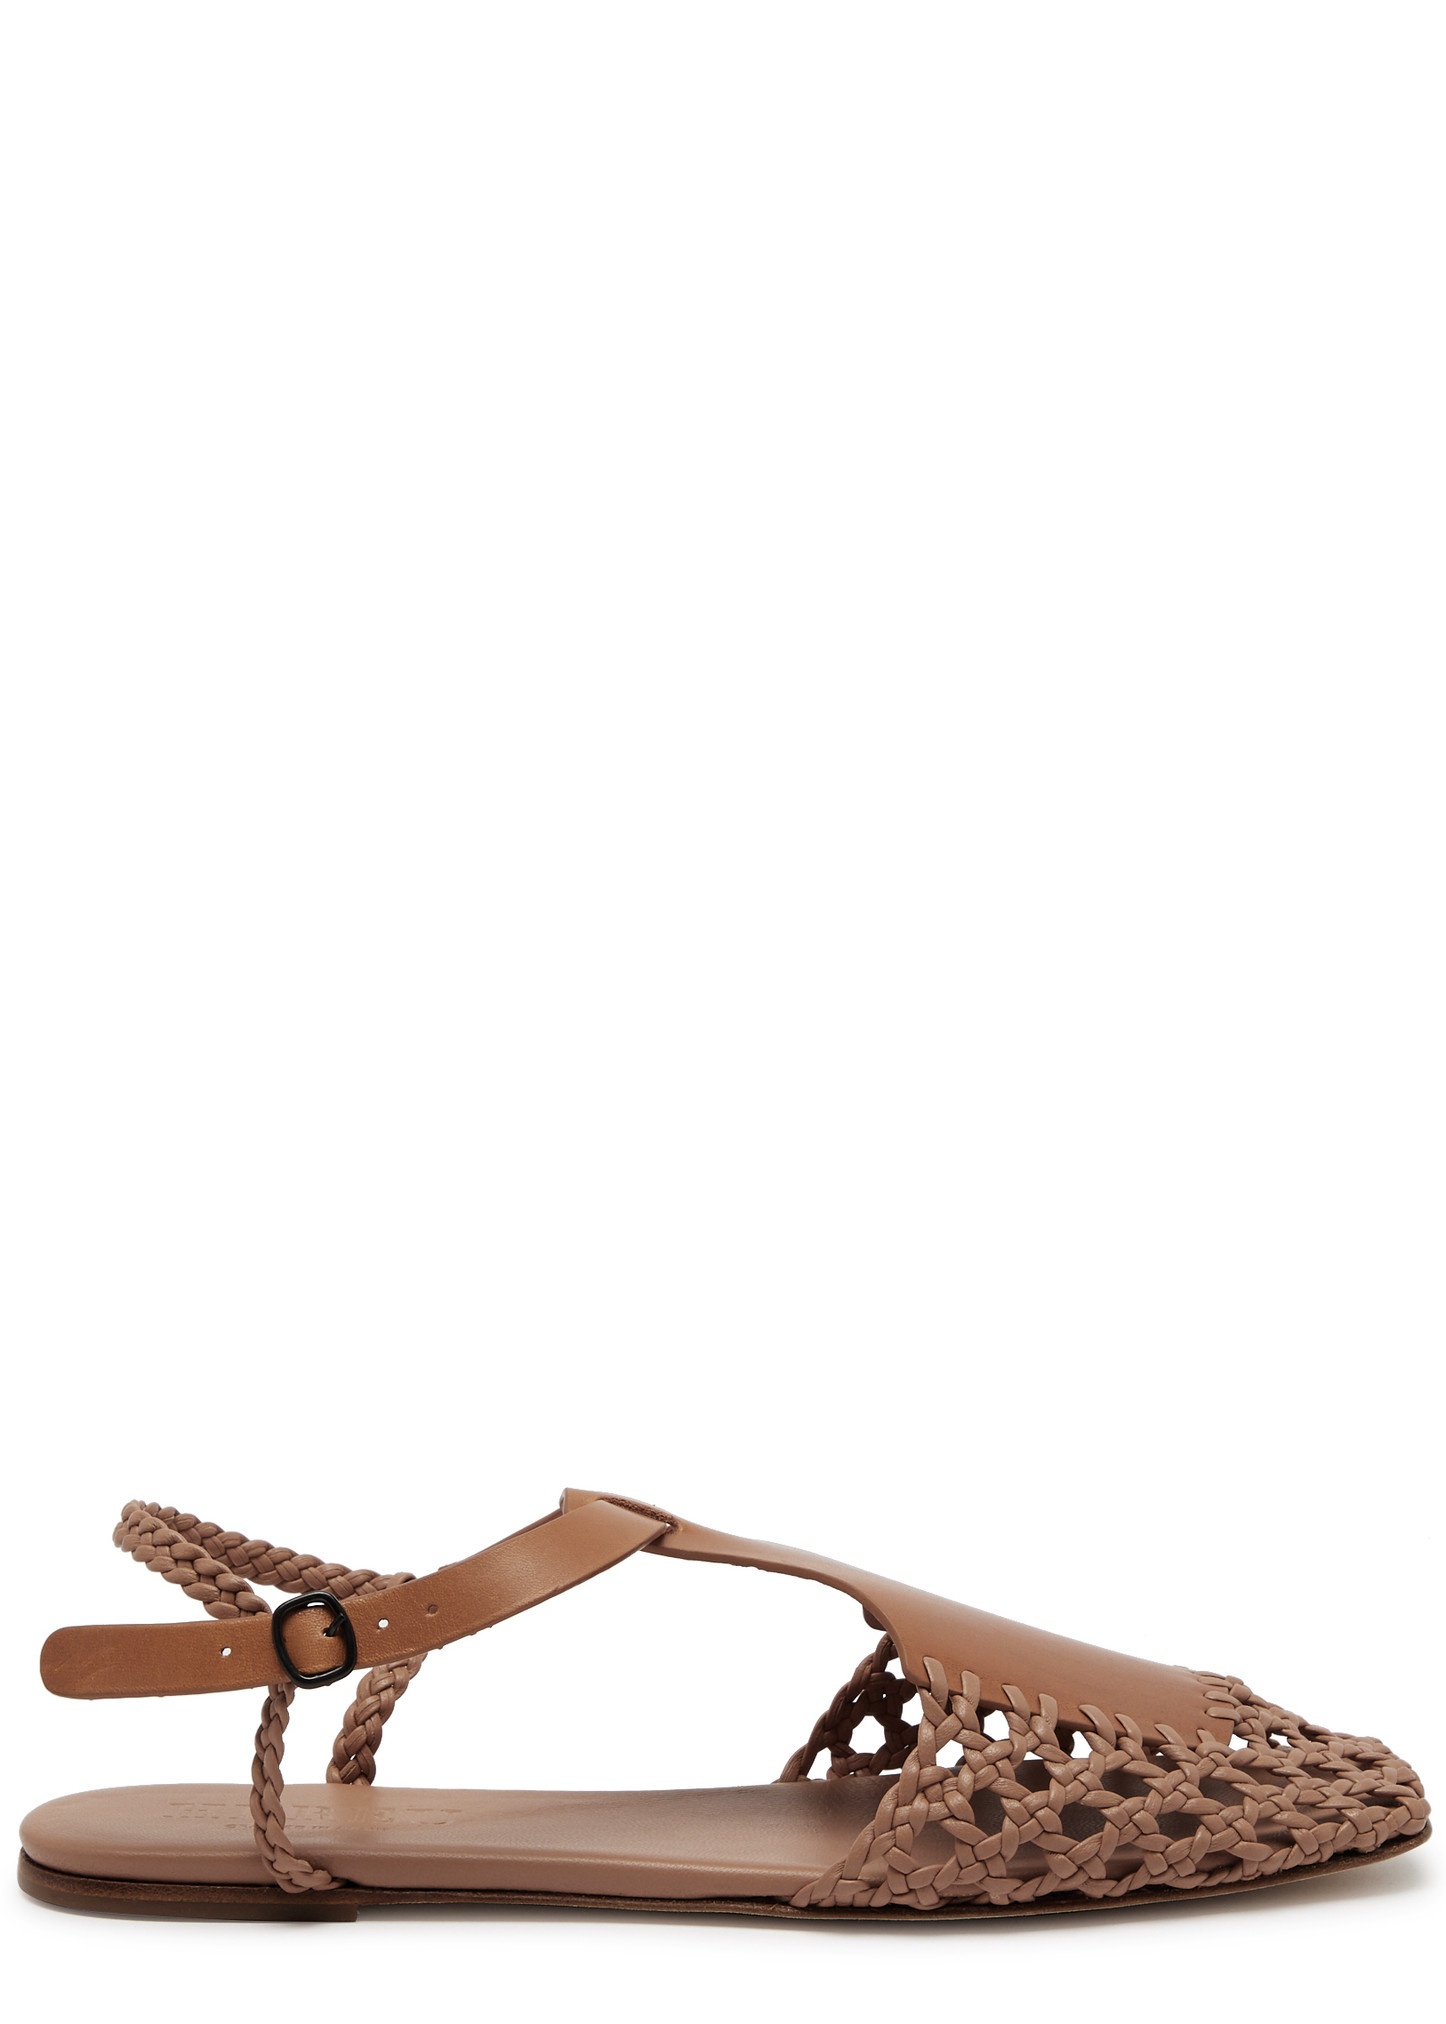 Reixa leather sandals - 1